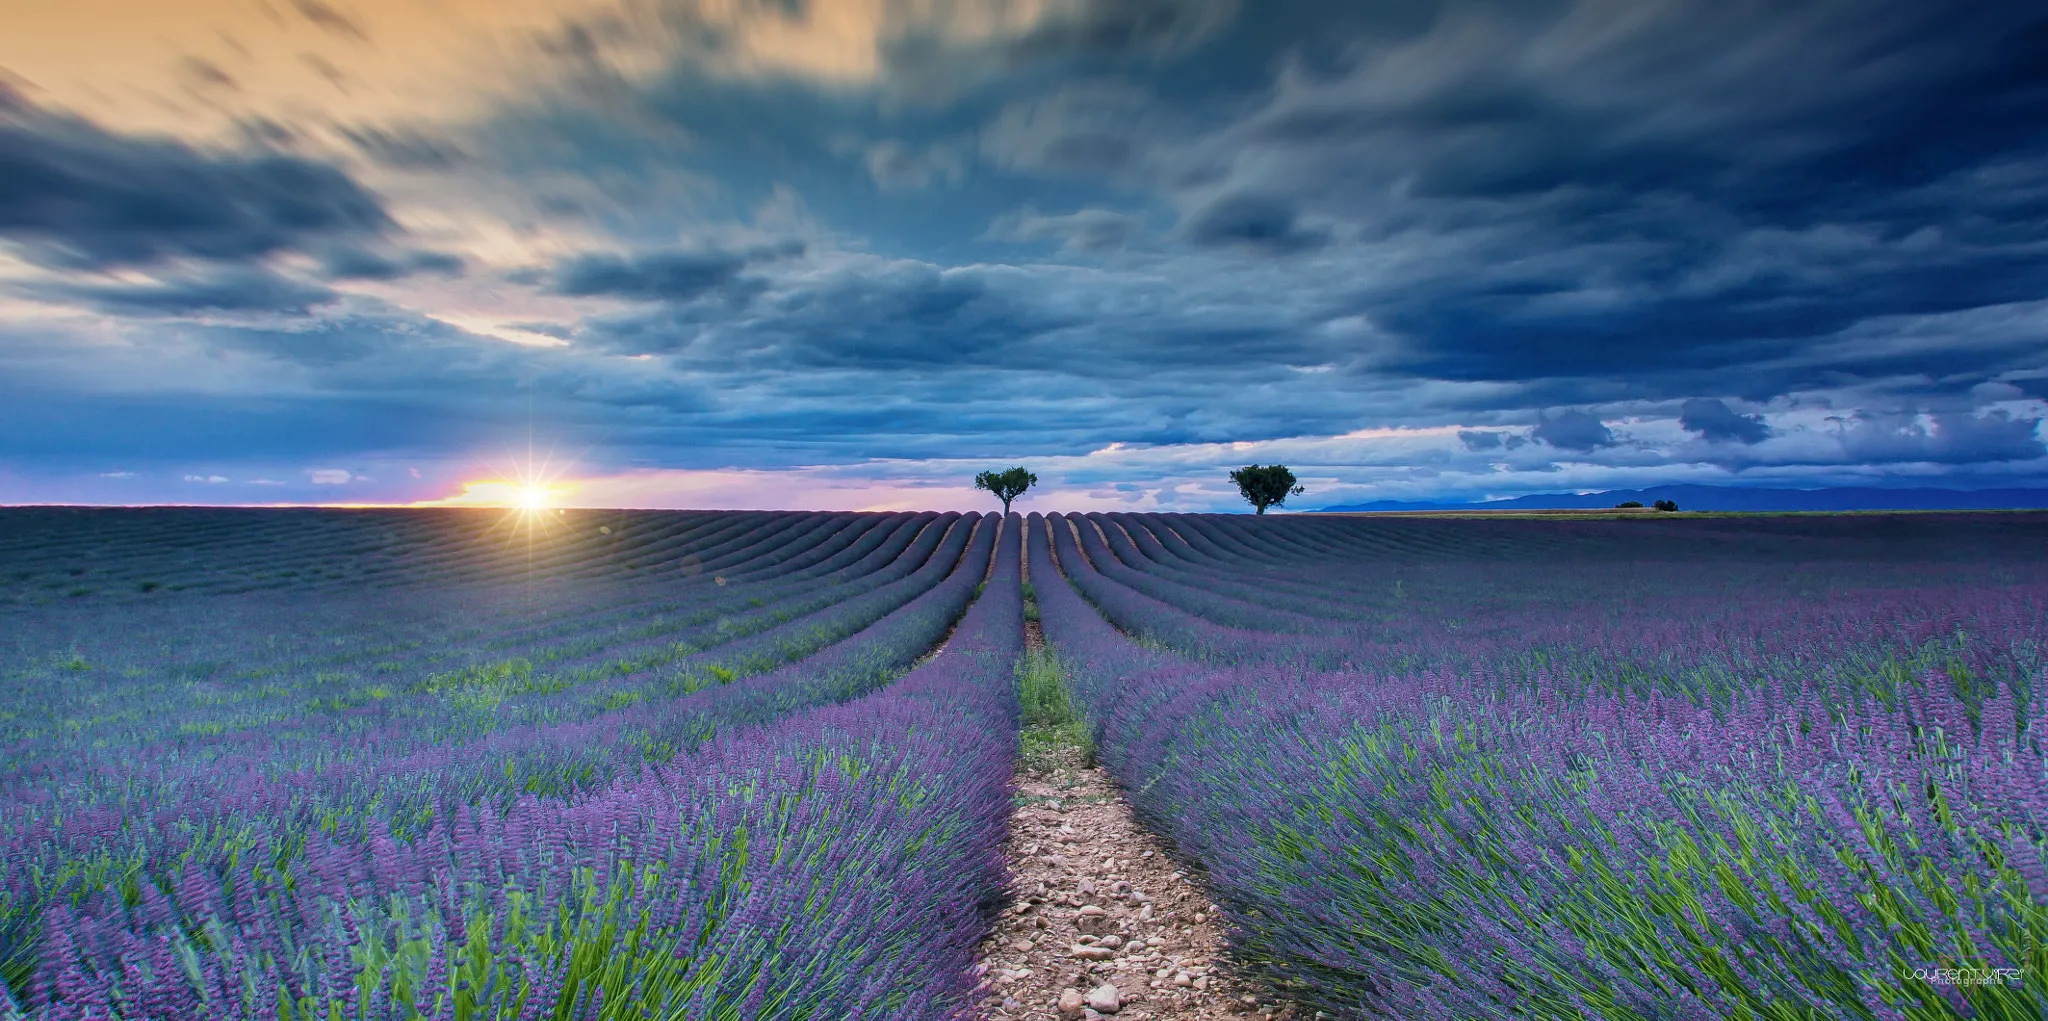 Photo showing: 500px provided description: Feeling on Valensole - Provence France [#field ,#landscape ,#sunset ,#nature ,#light ,#clouds ,#summer ,#natural ,#colors ,#france ,#long exposure ,#provence ,#paysage ,#lavande ,#champs ,#valensole ,#bouches-du-rh?ne ,#Provence-Alpes-C?te-d'Azur ,#lanvender]